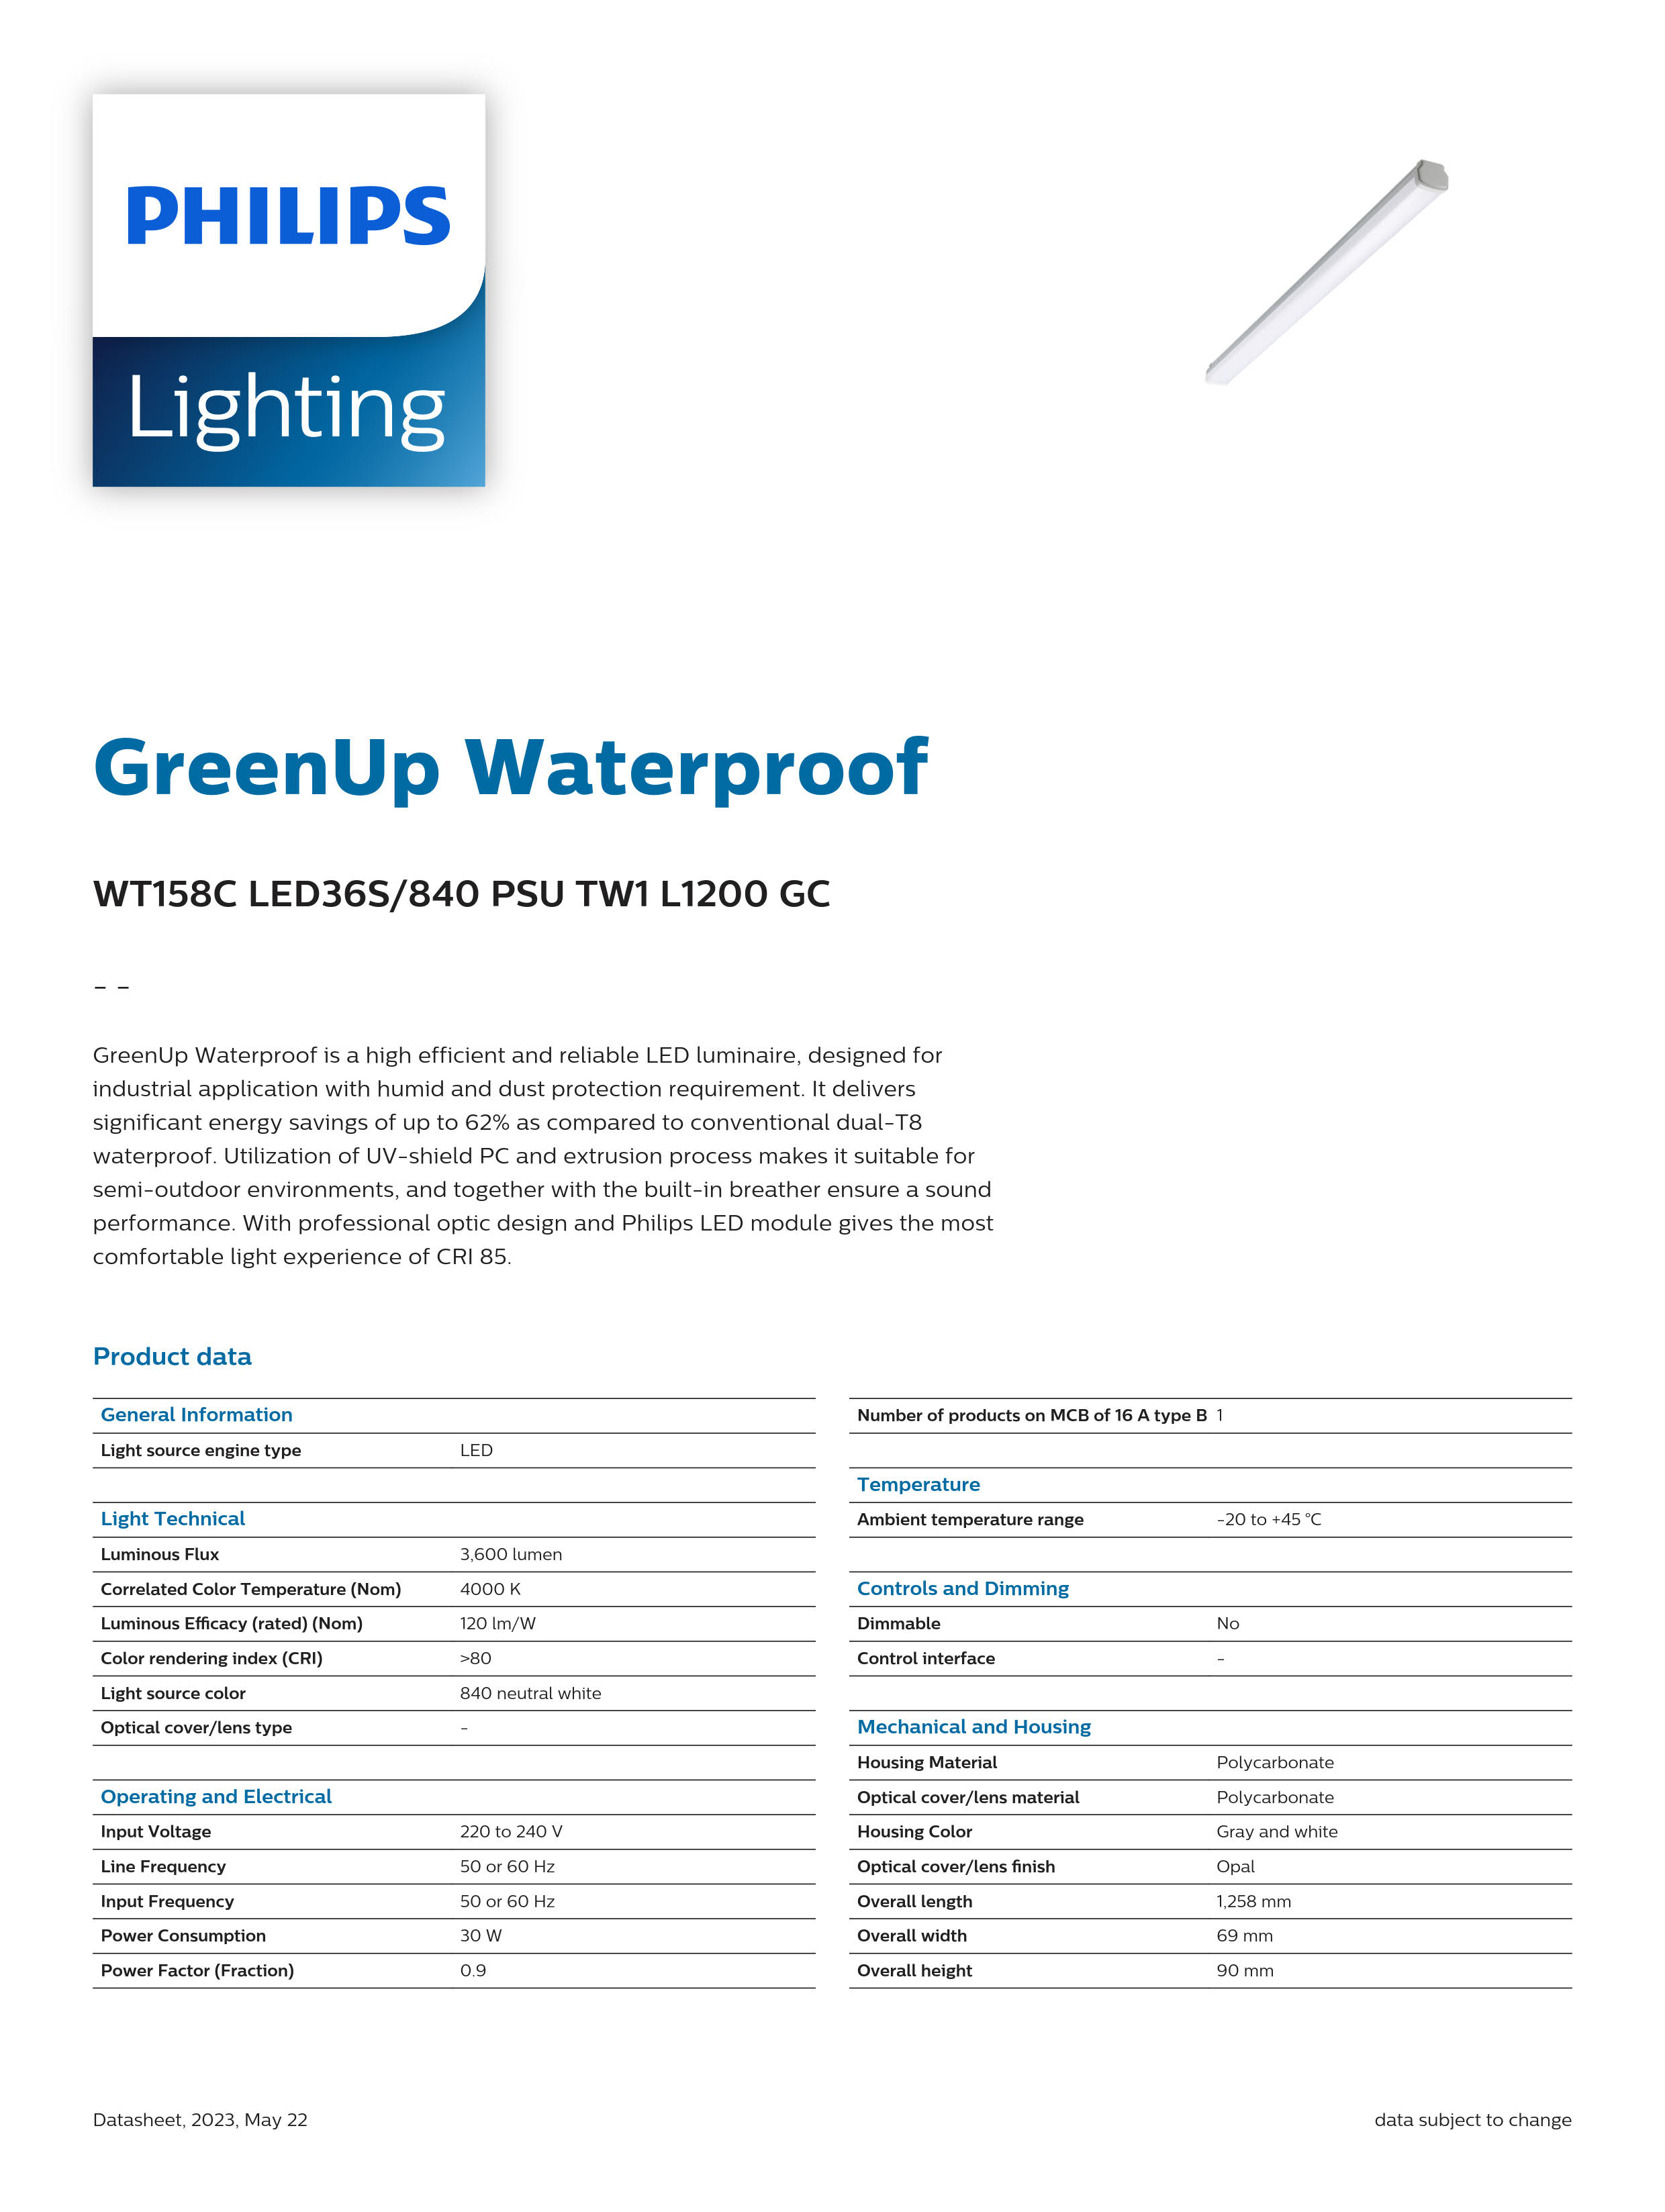 PHILIPS Waterproof WT158C LED36S/840 PSU TW1 L1200 GC 911401894280